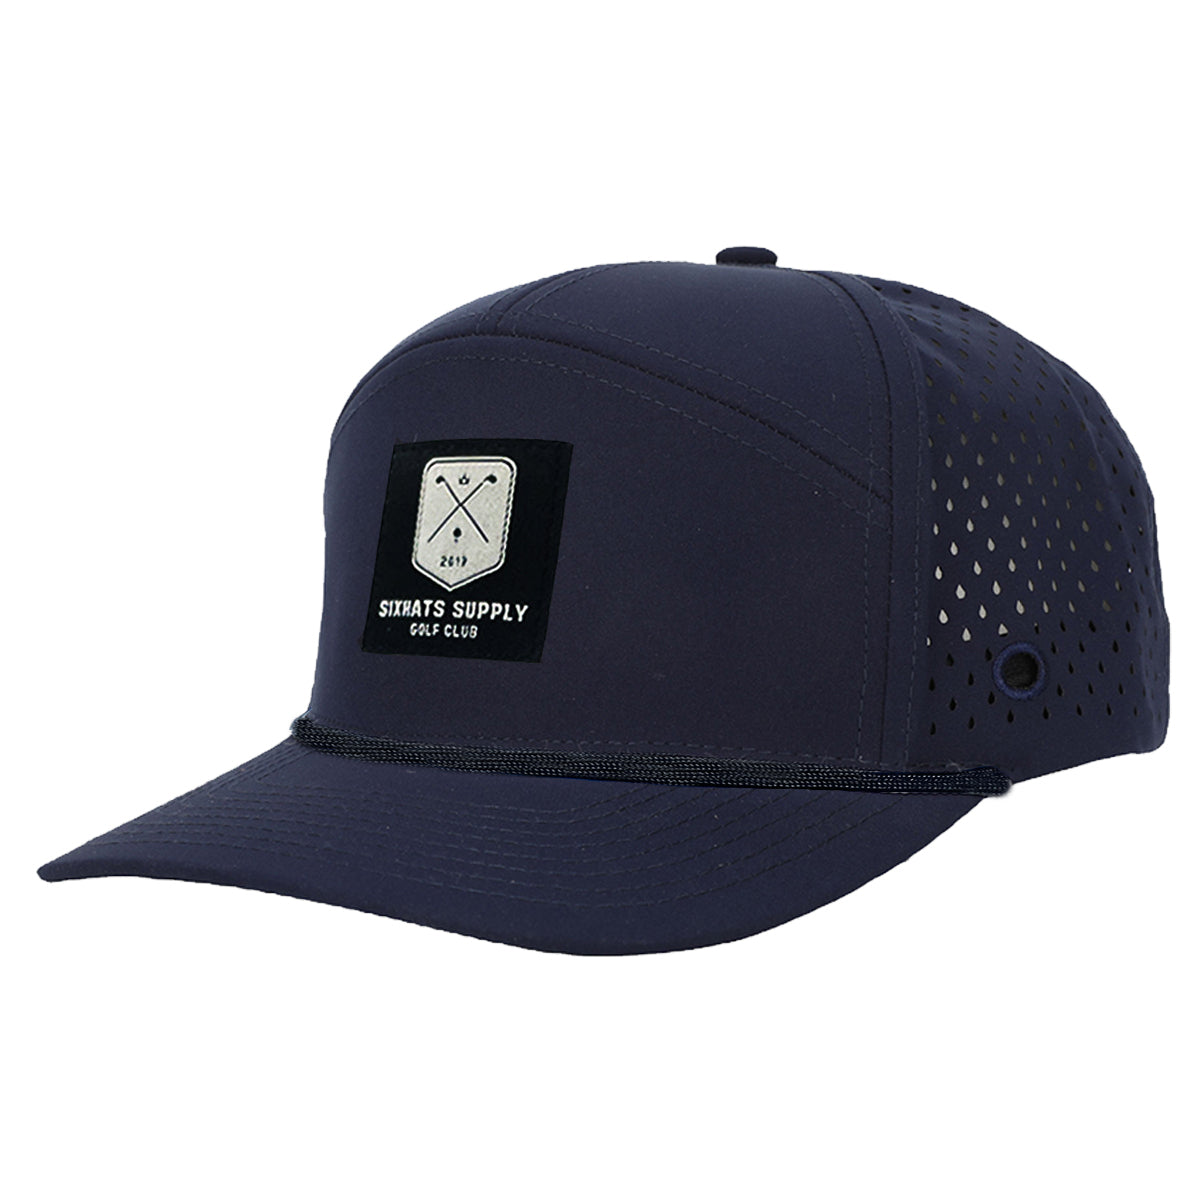 Navy Golf Black Rope Tradesman Tee Holder Hat W/ Magnetic Ball Marker